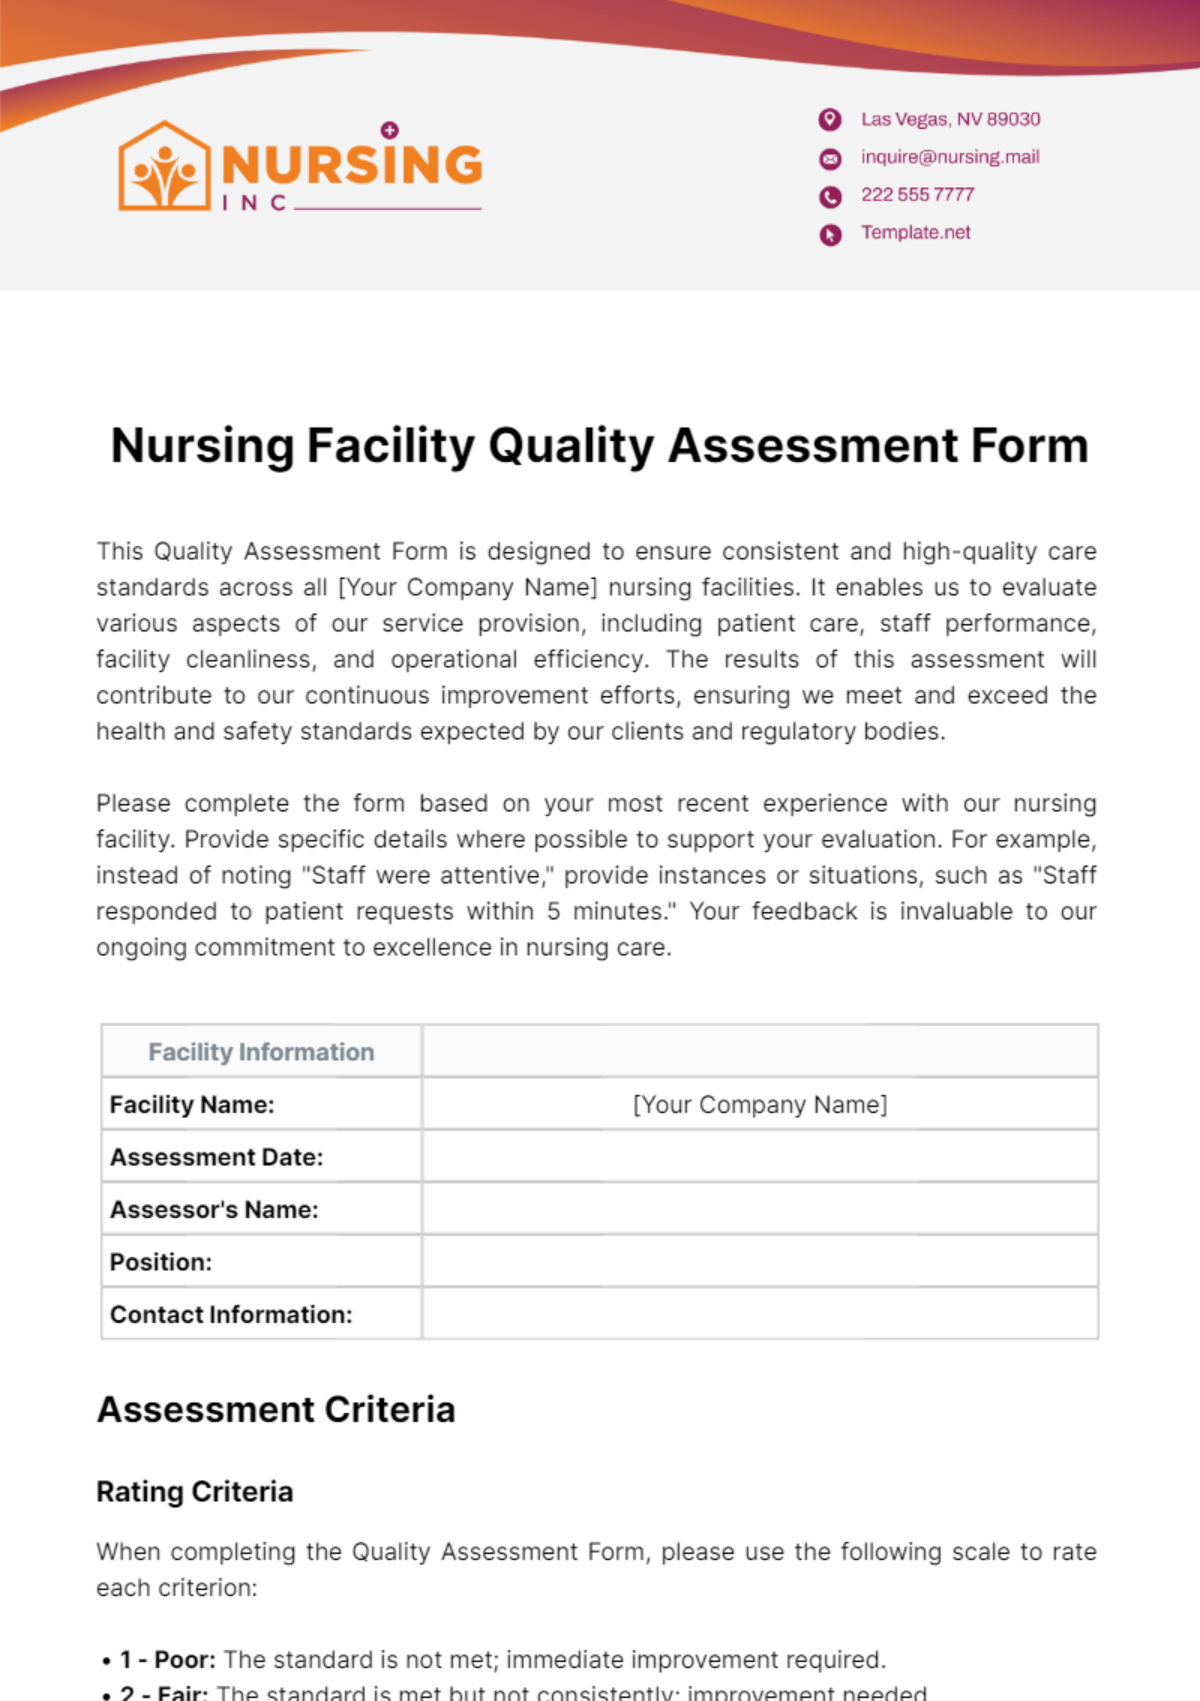 Nursing Facility Quality Assessment Form Template